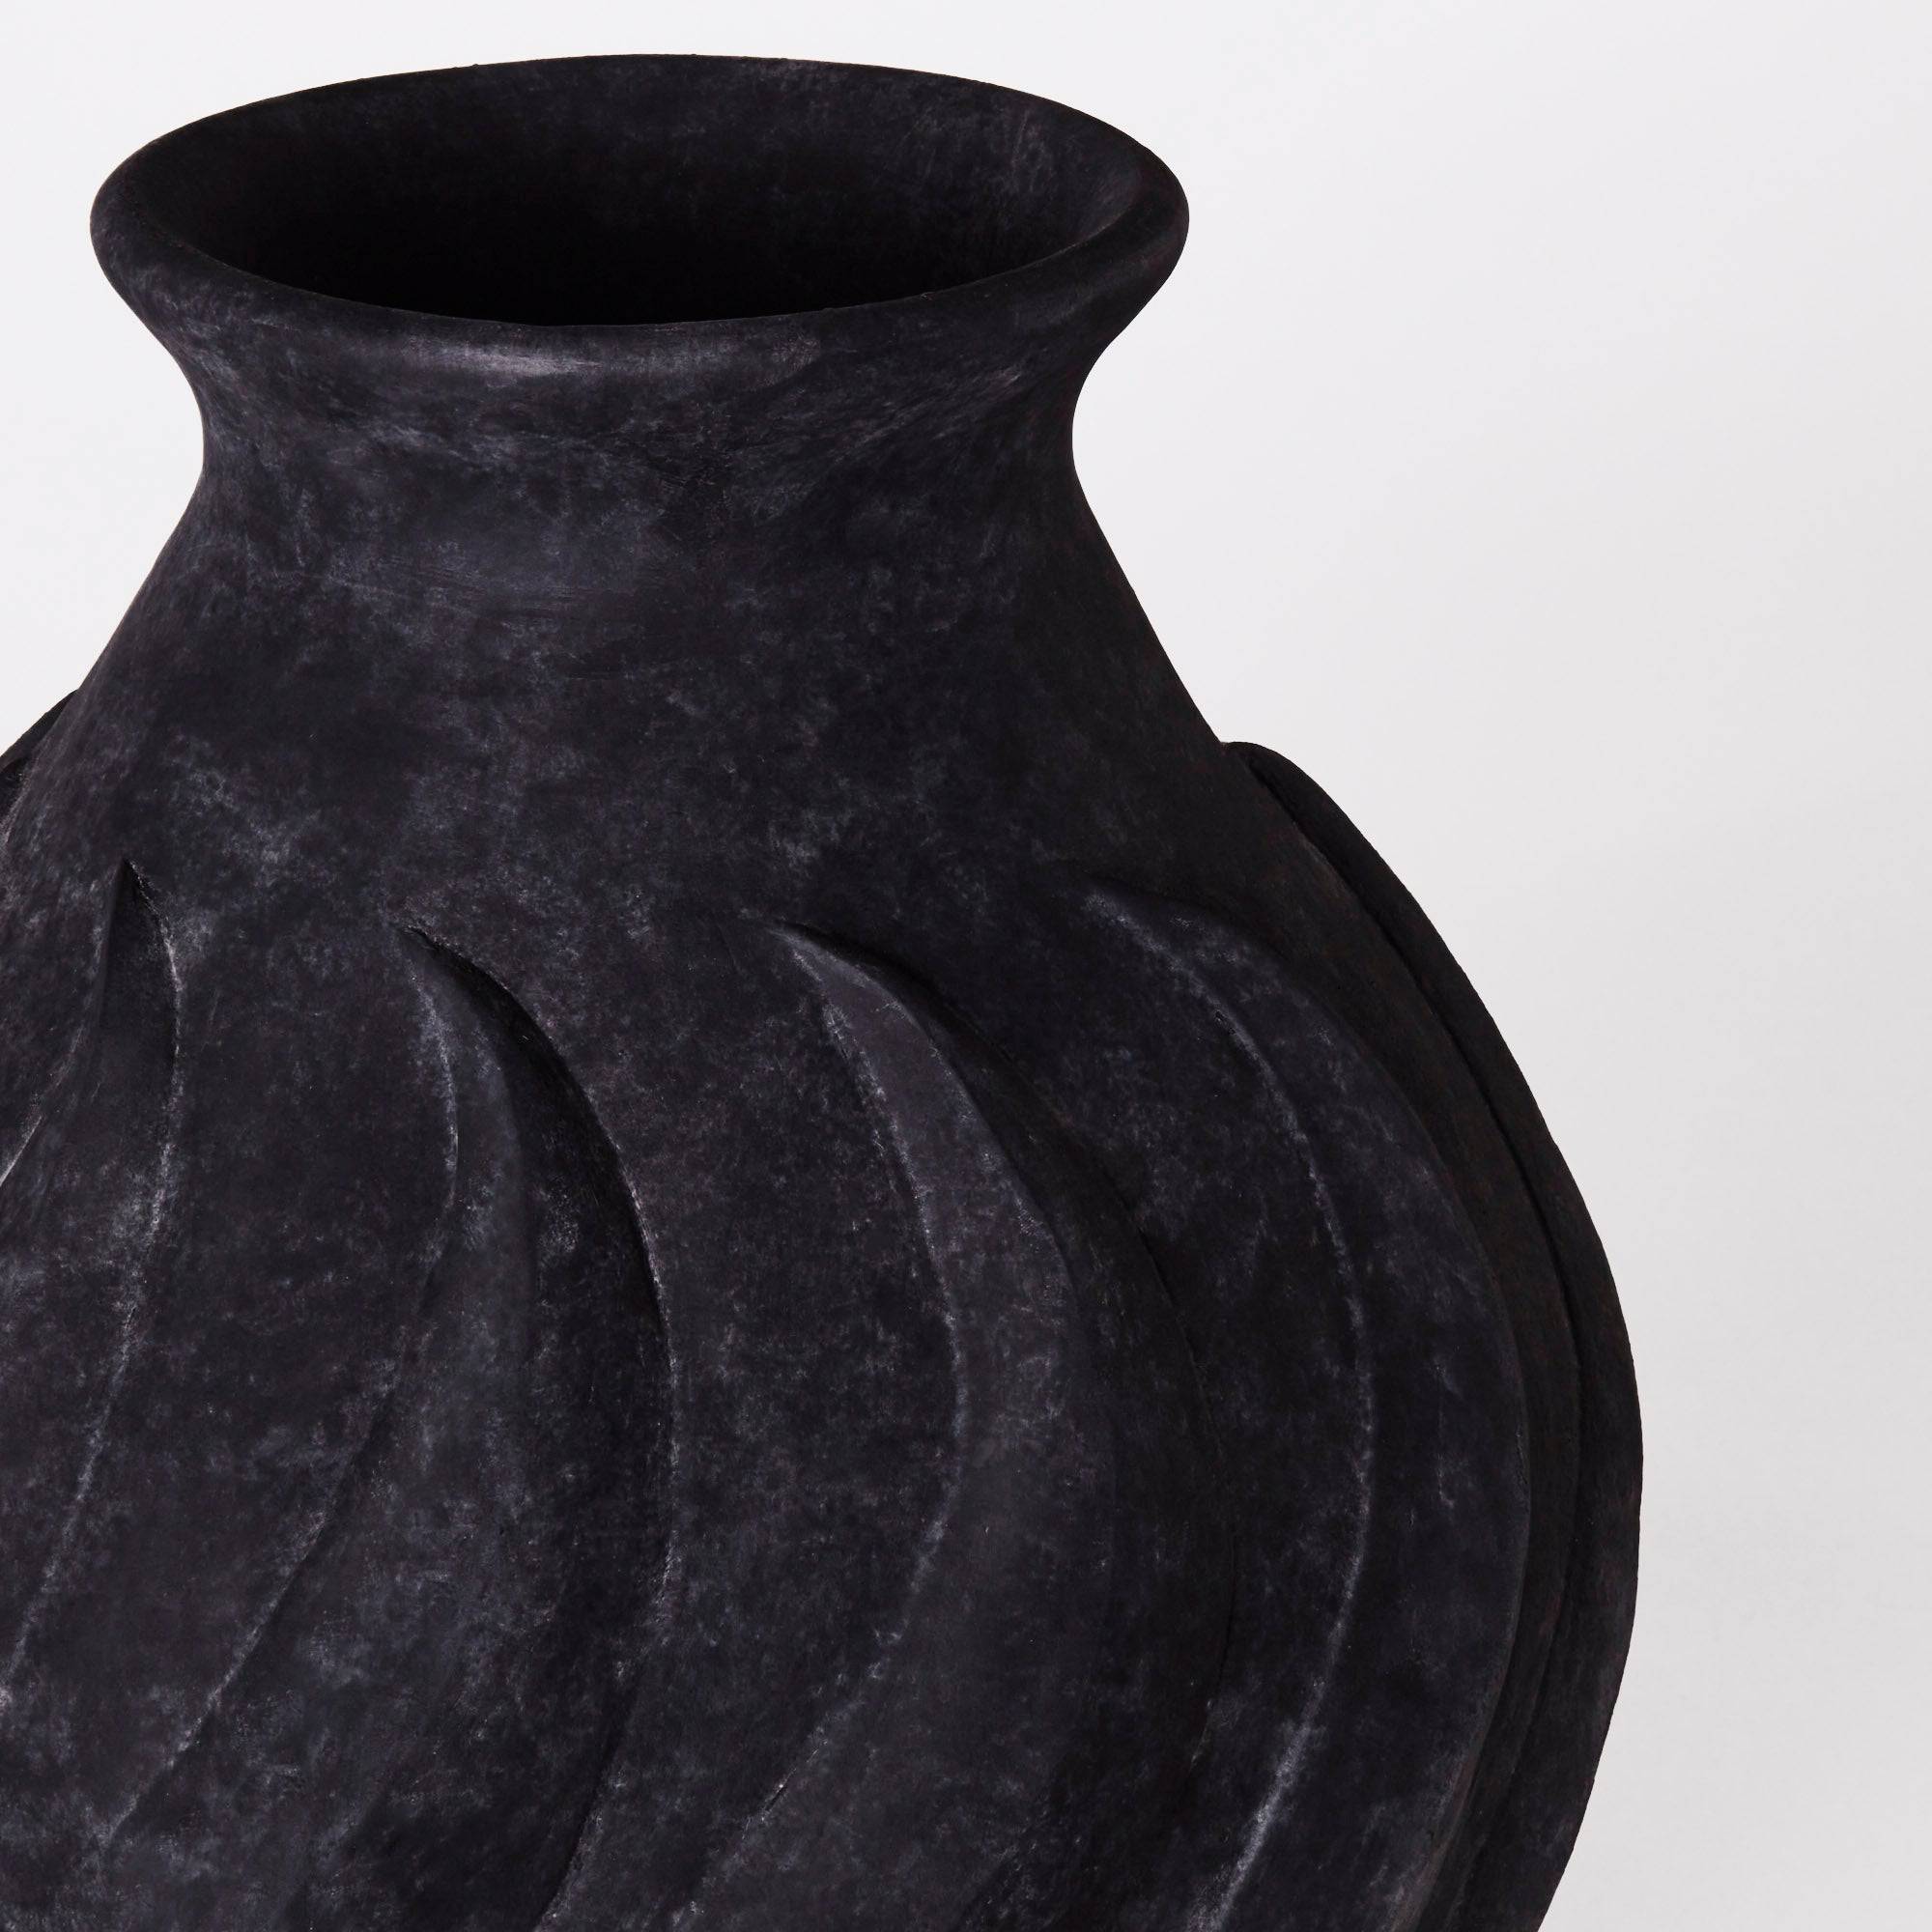 Swirl Vase Black Large - THAT COOL LIVING